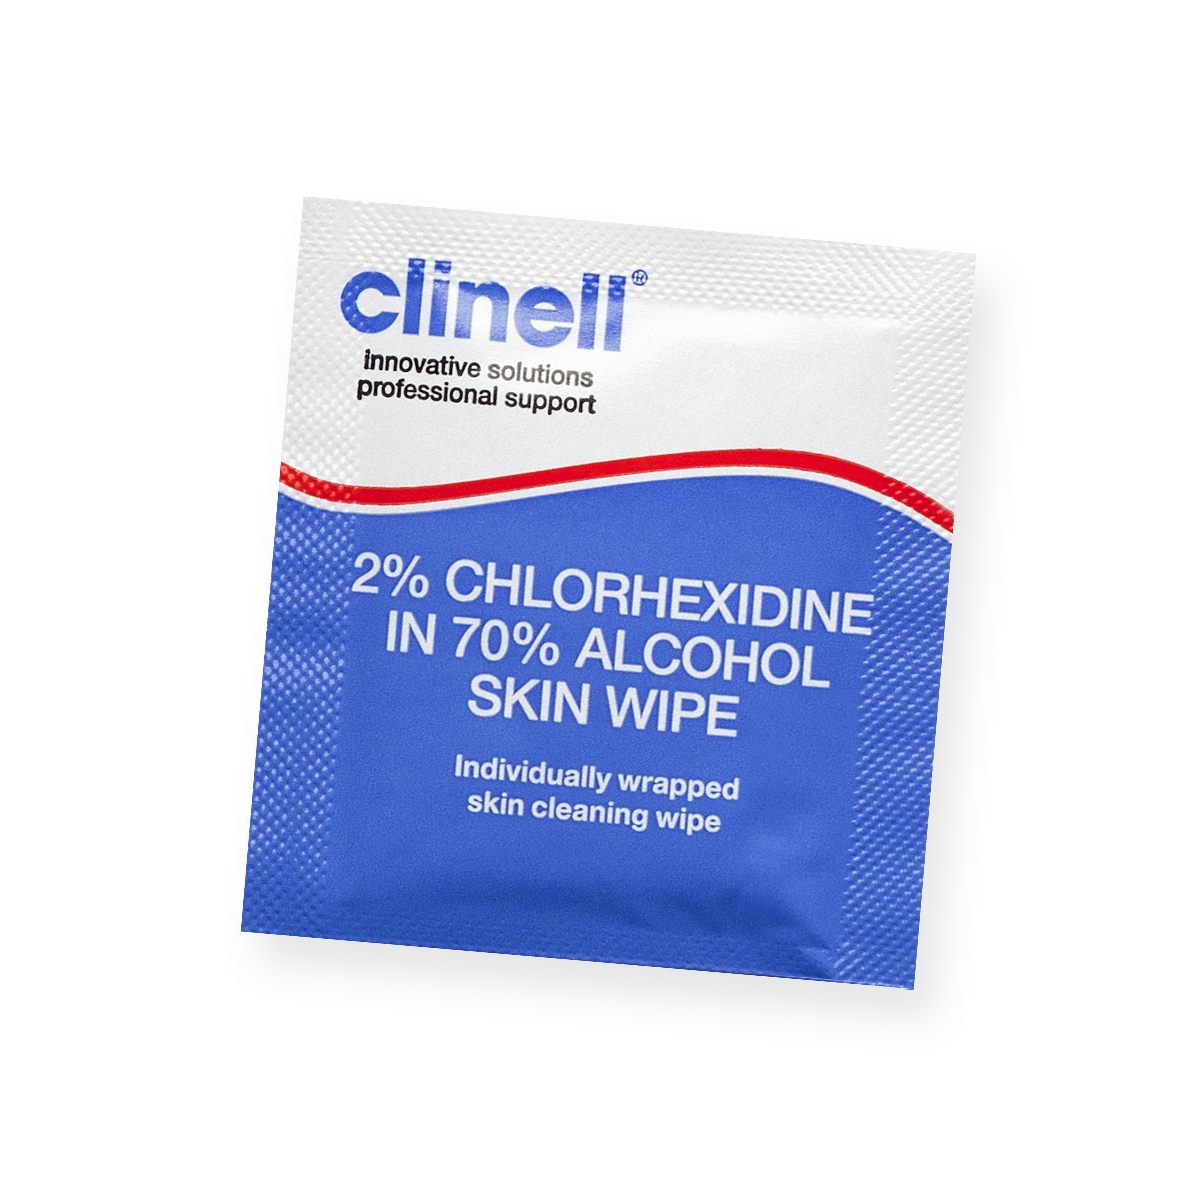 Clinell 2% Chlorhexidine in 70% Alcohol skin wipe